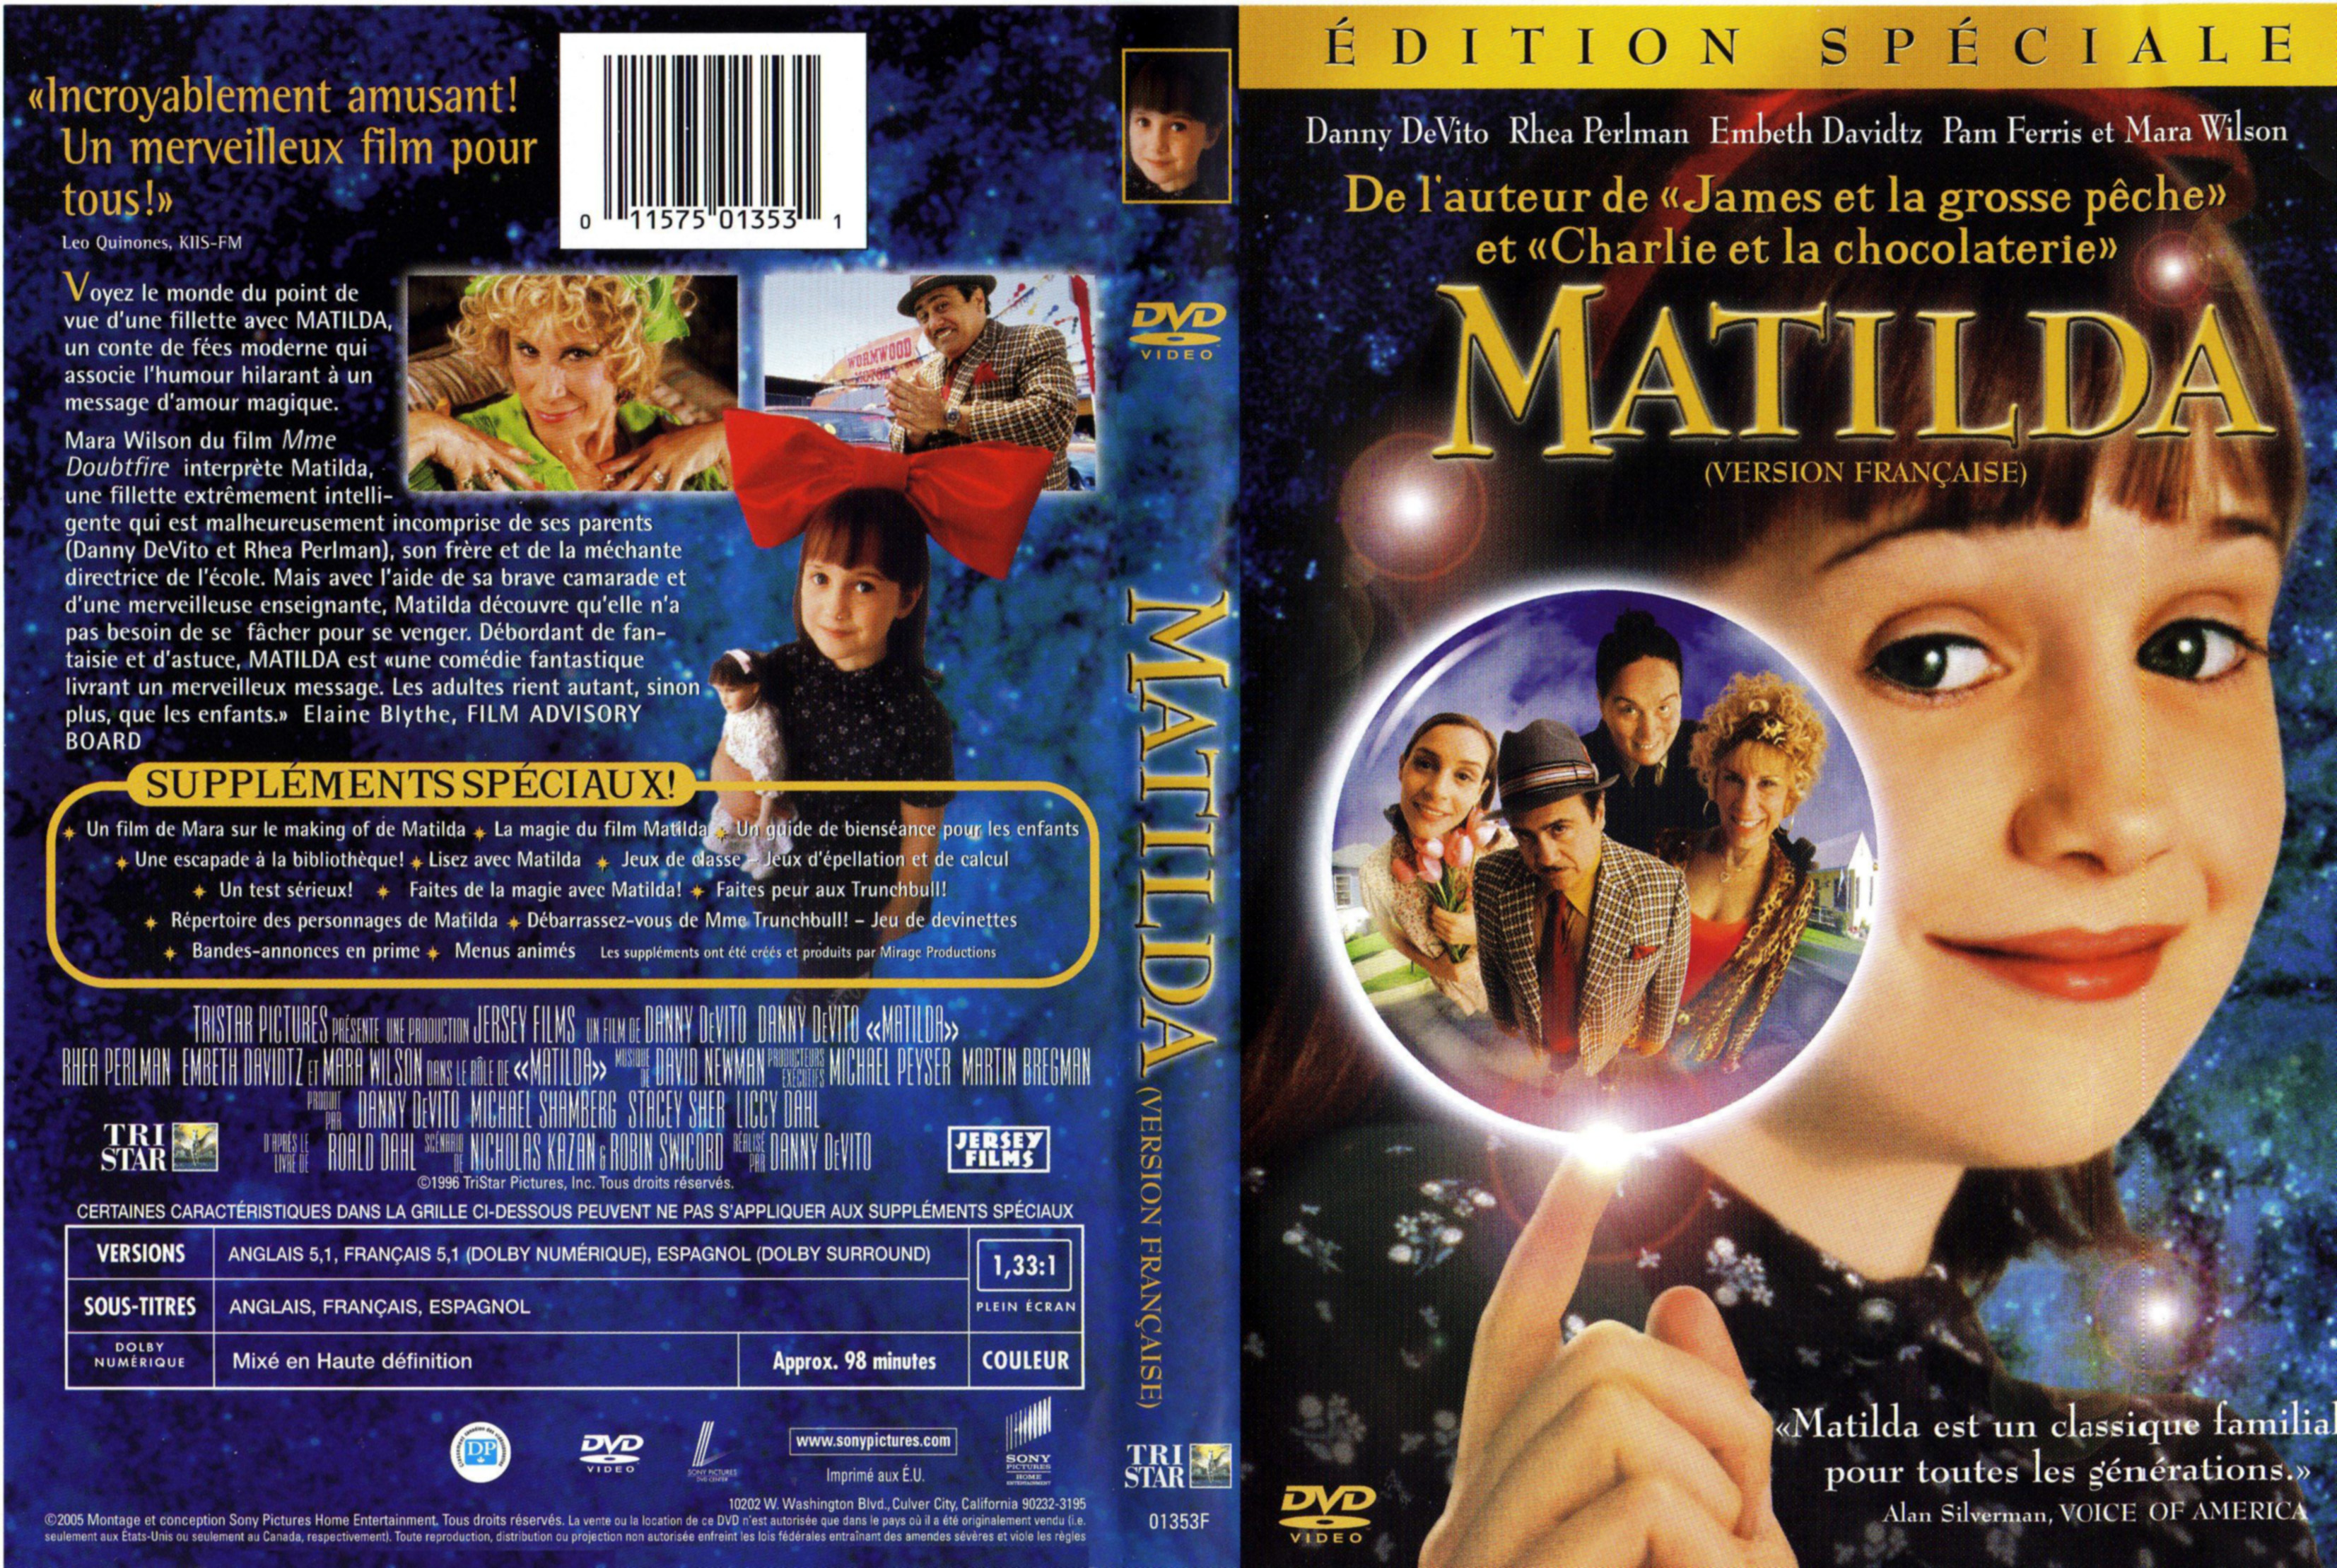 Jaquette DVD Matilda v2